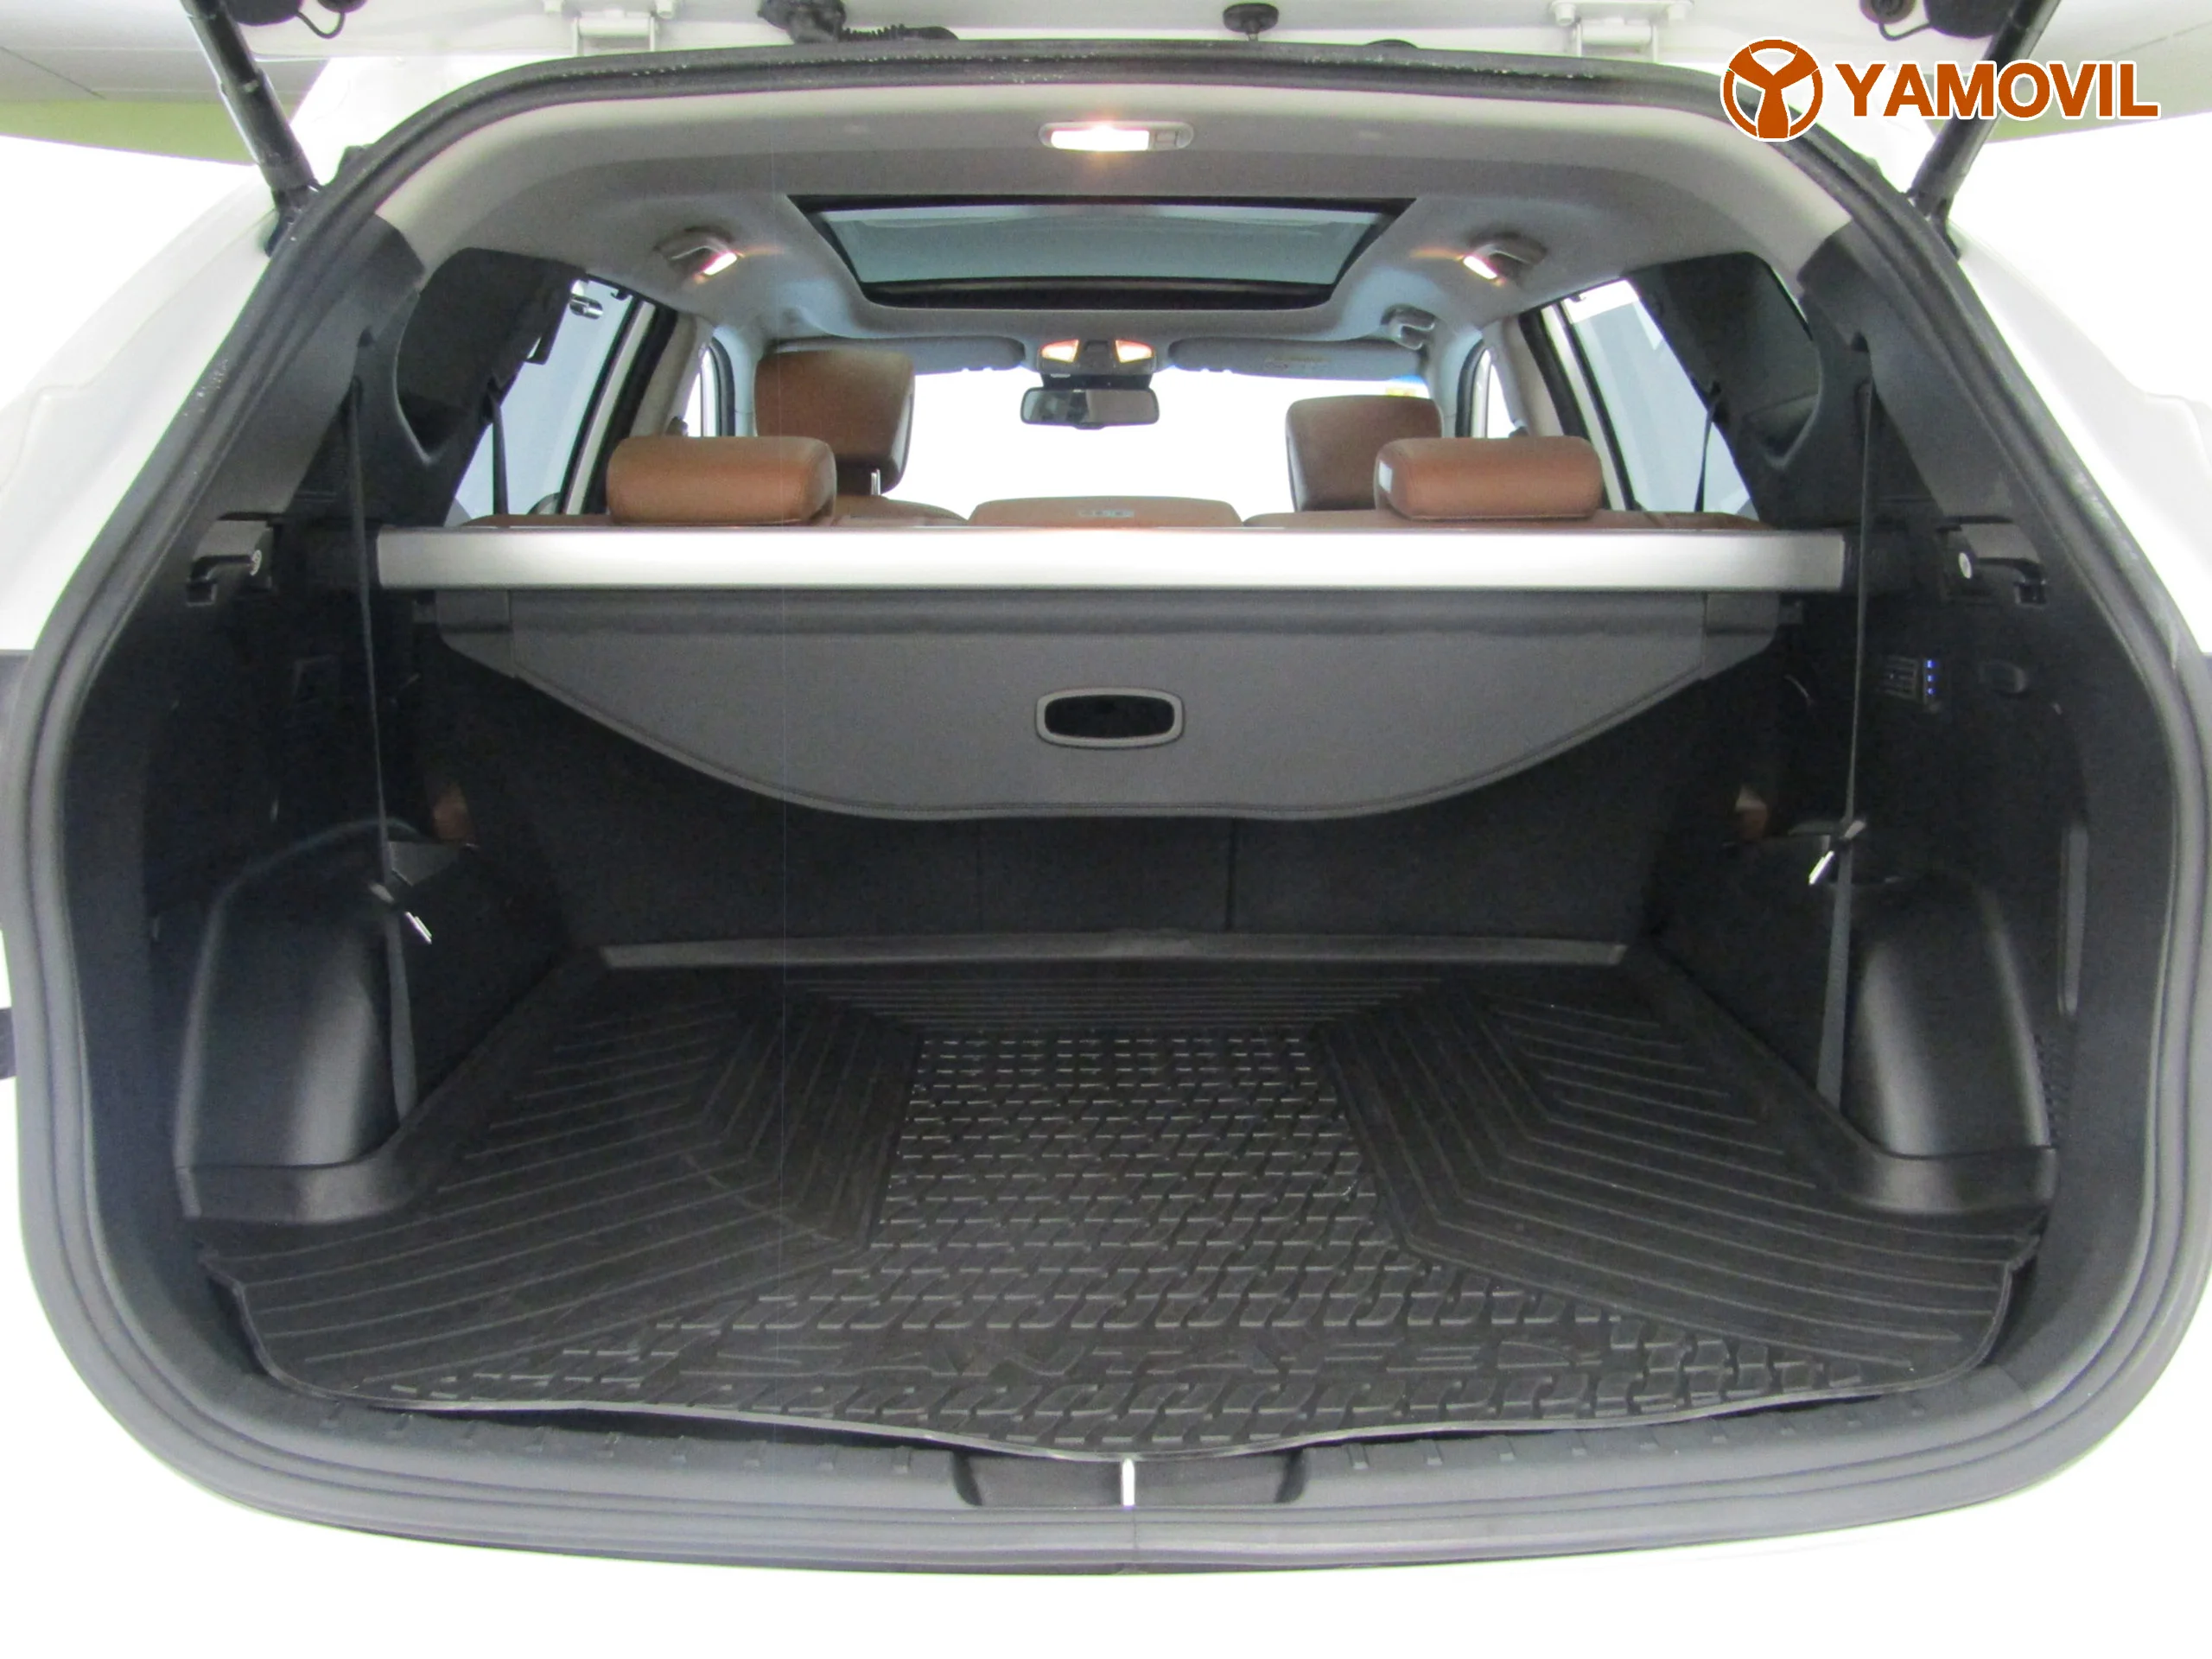 Hyundai Santa Fe 2.2 CRDI STYLE SAFE 200CV AUTO. 4X4 7 PLAZAS 5P - Foto 7